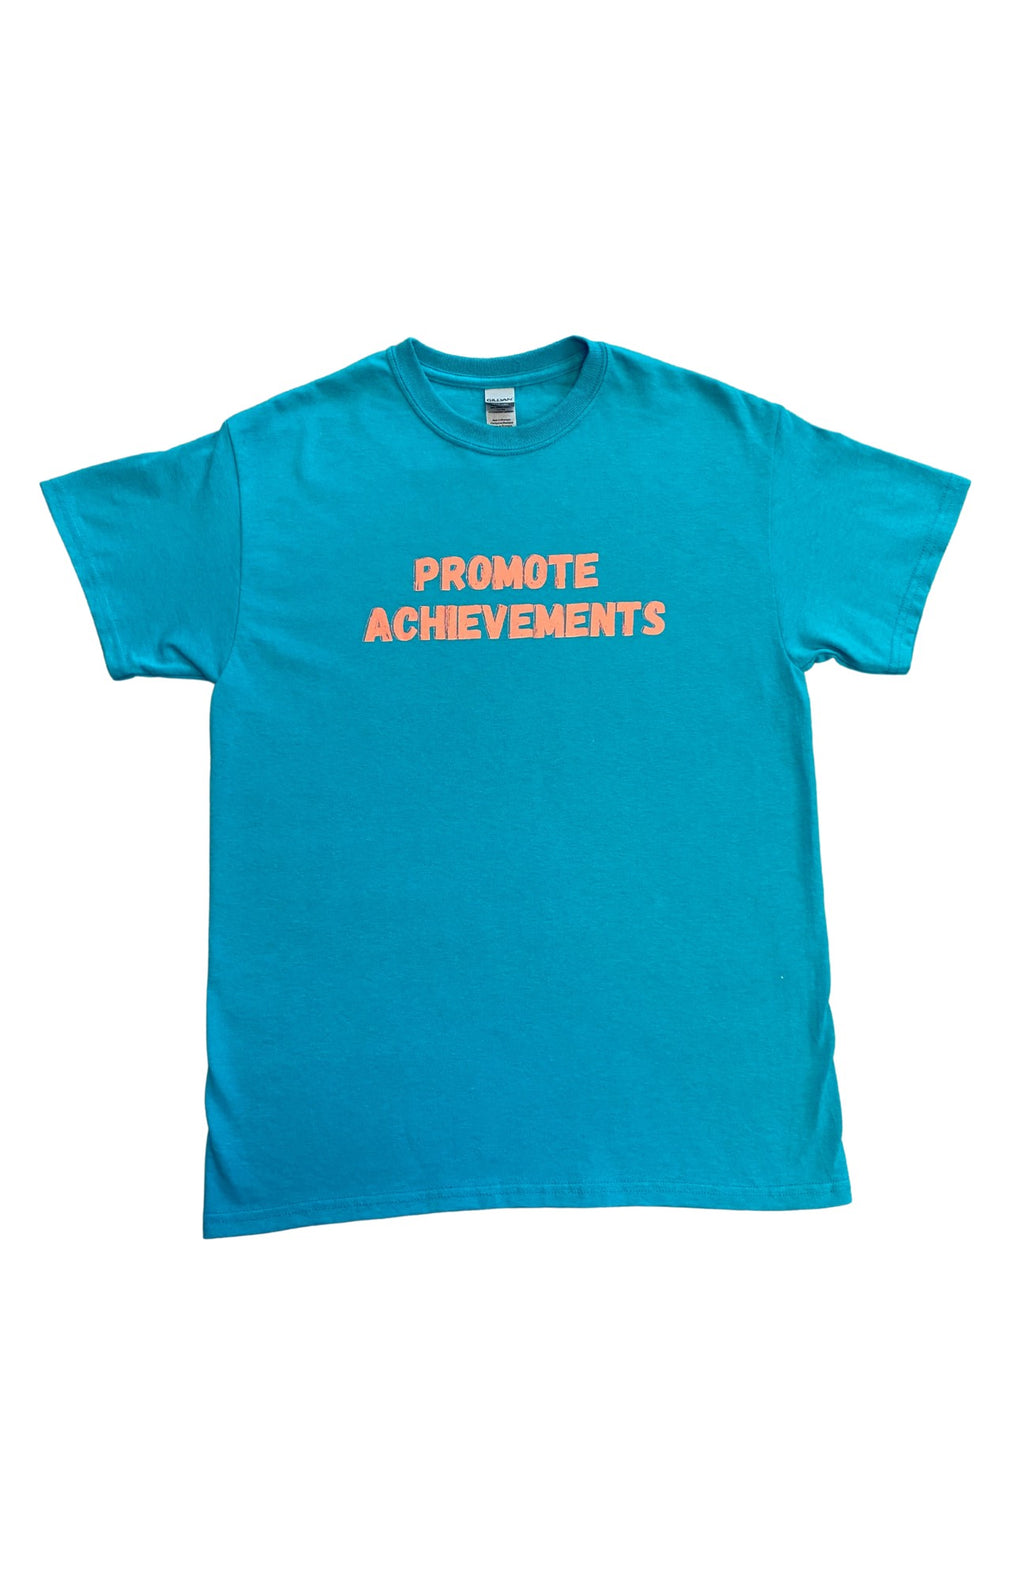 "Promote Achievements" Tee